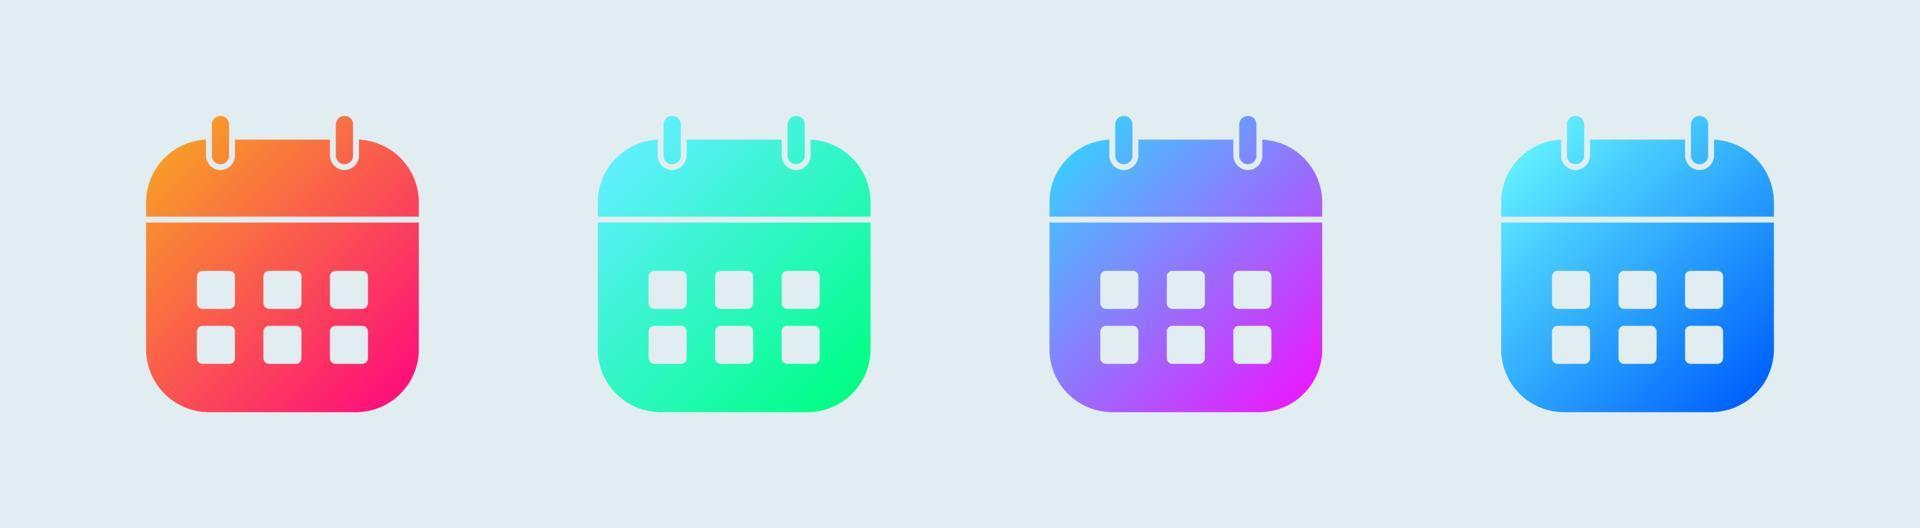 Set of calendar symbols. Calendar Icon collection in gradient colors. vector